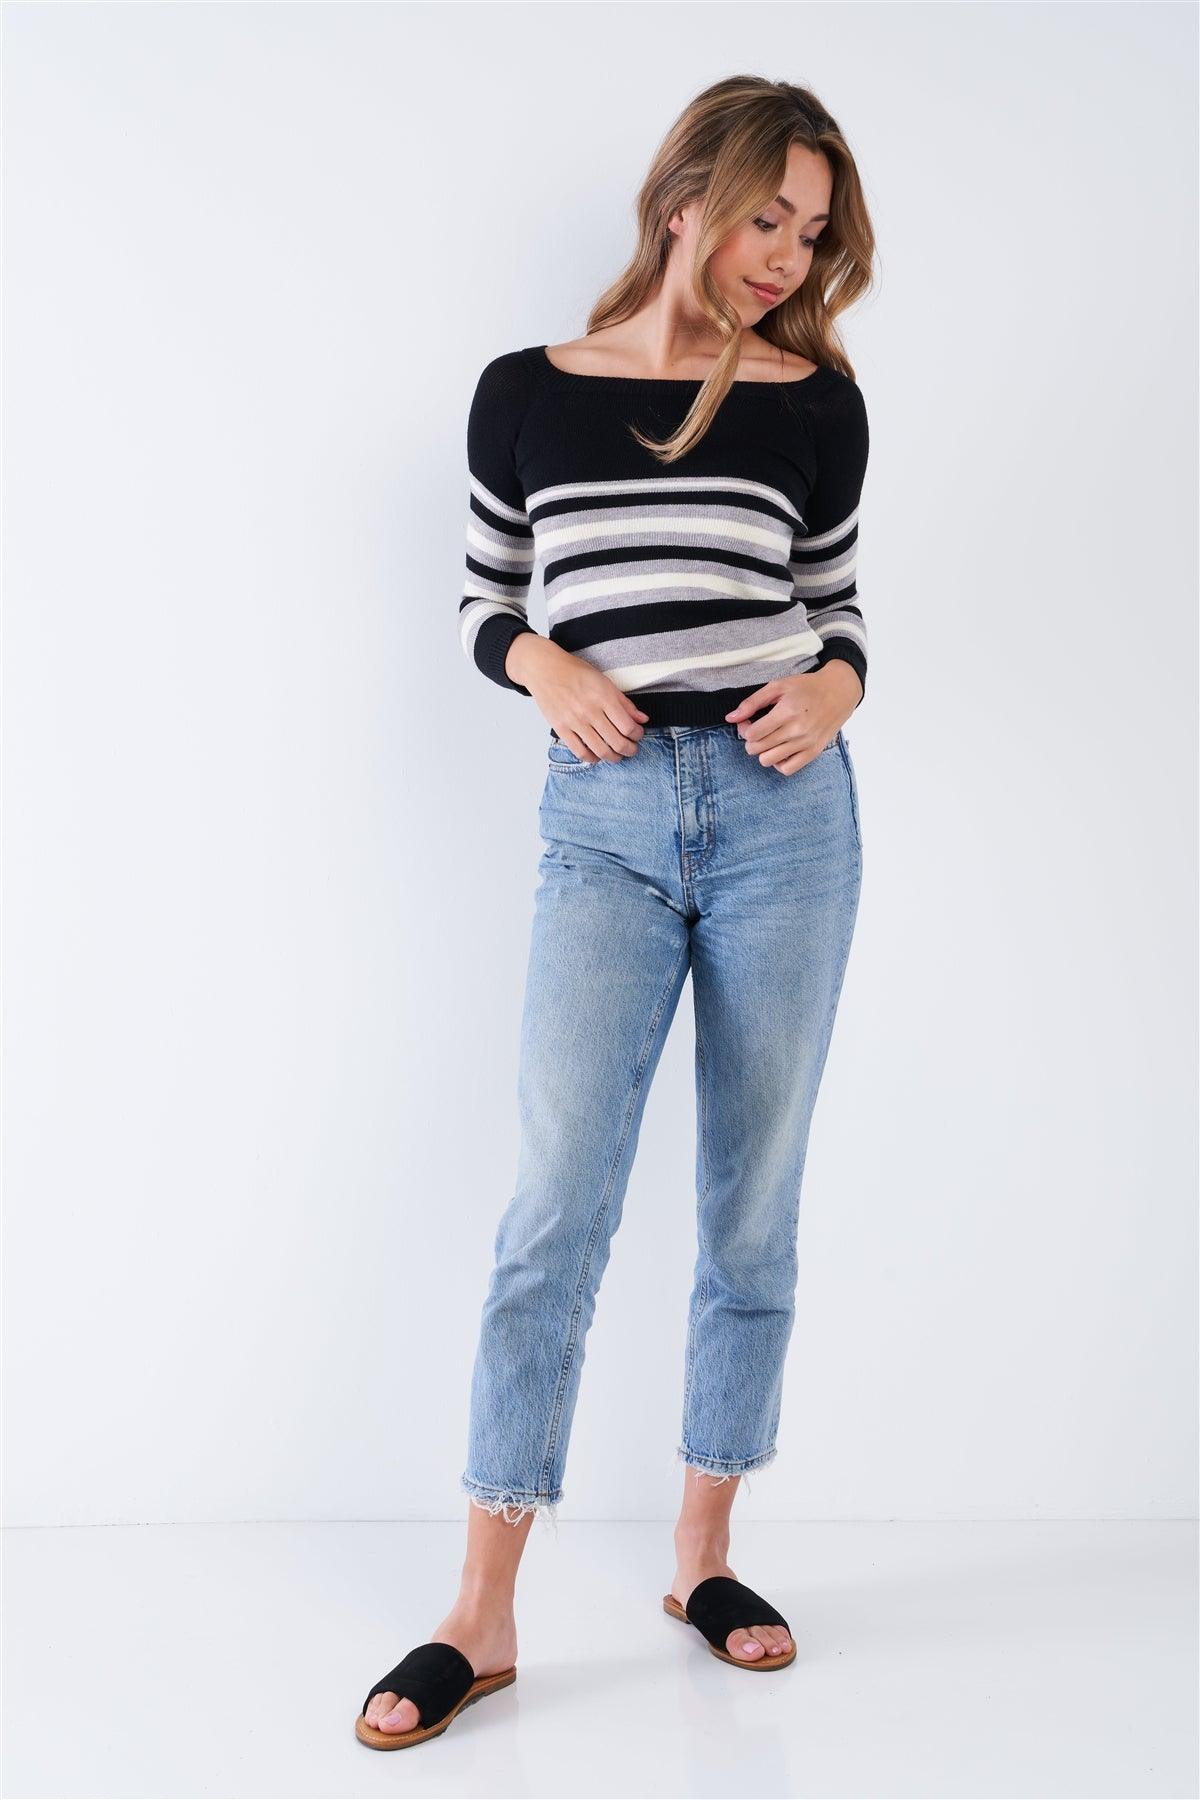 Black Multi Stripe Square Neck Long Sleeve Sweater